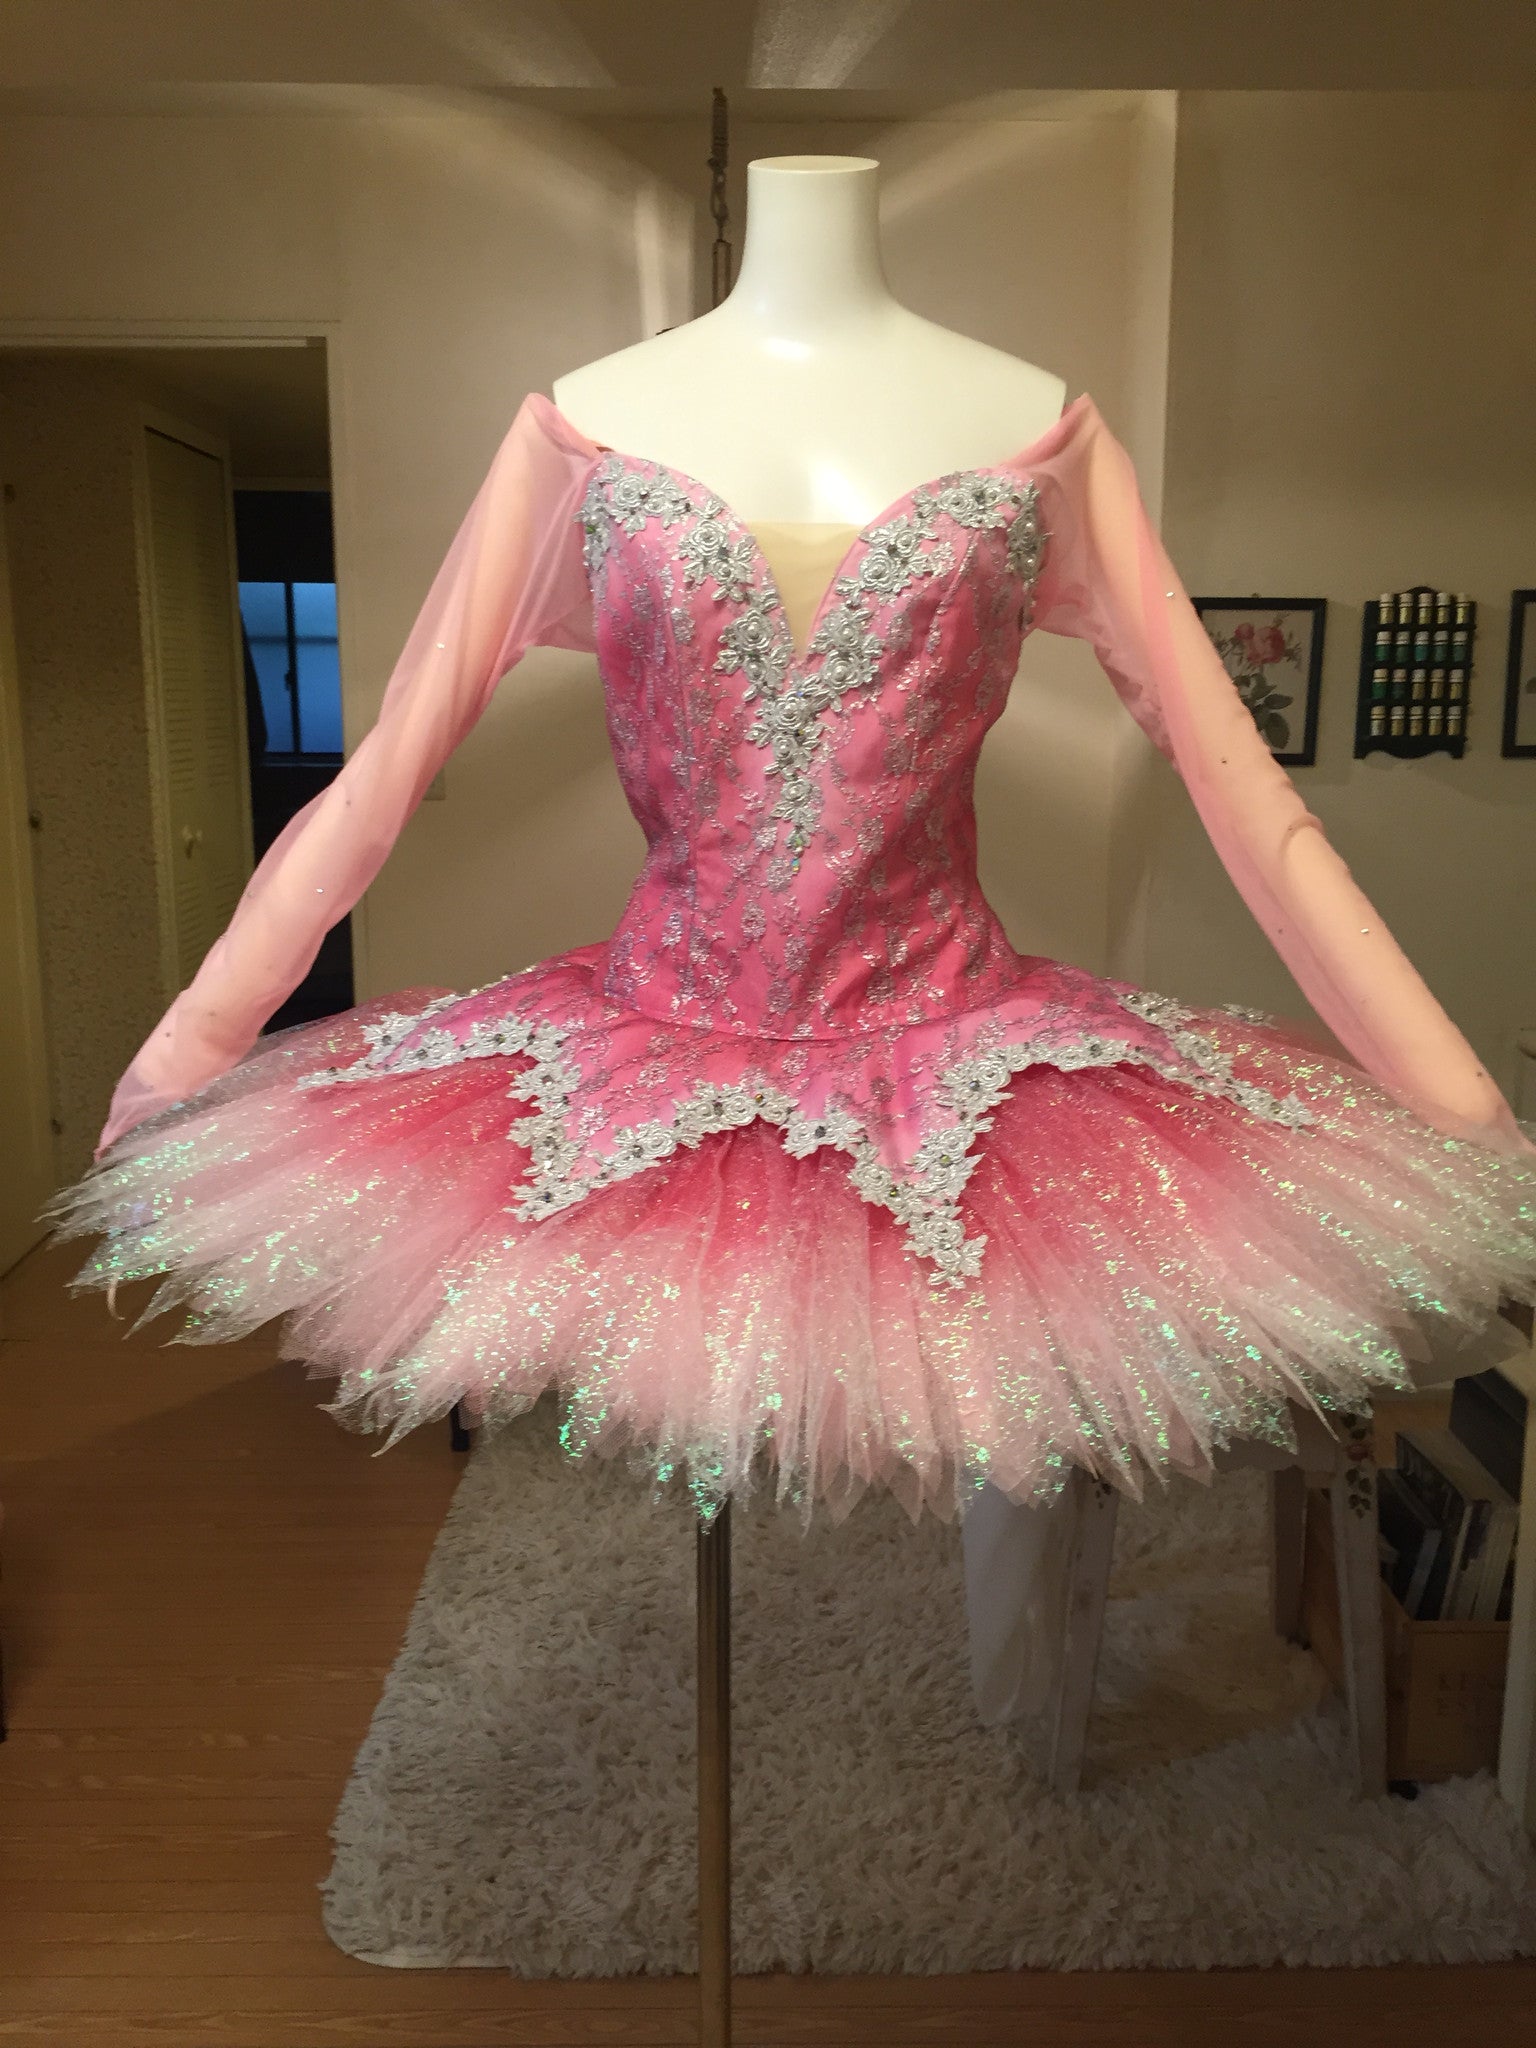 The Sugar Plum Fairy - Dancewear by Patricia